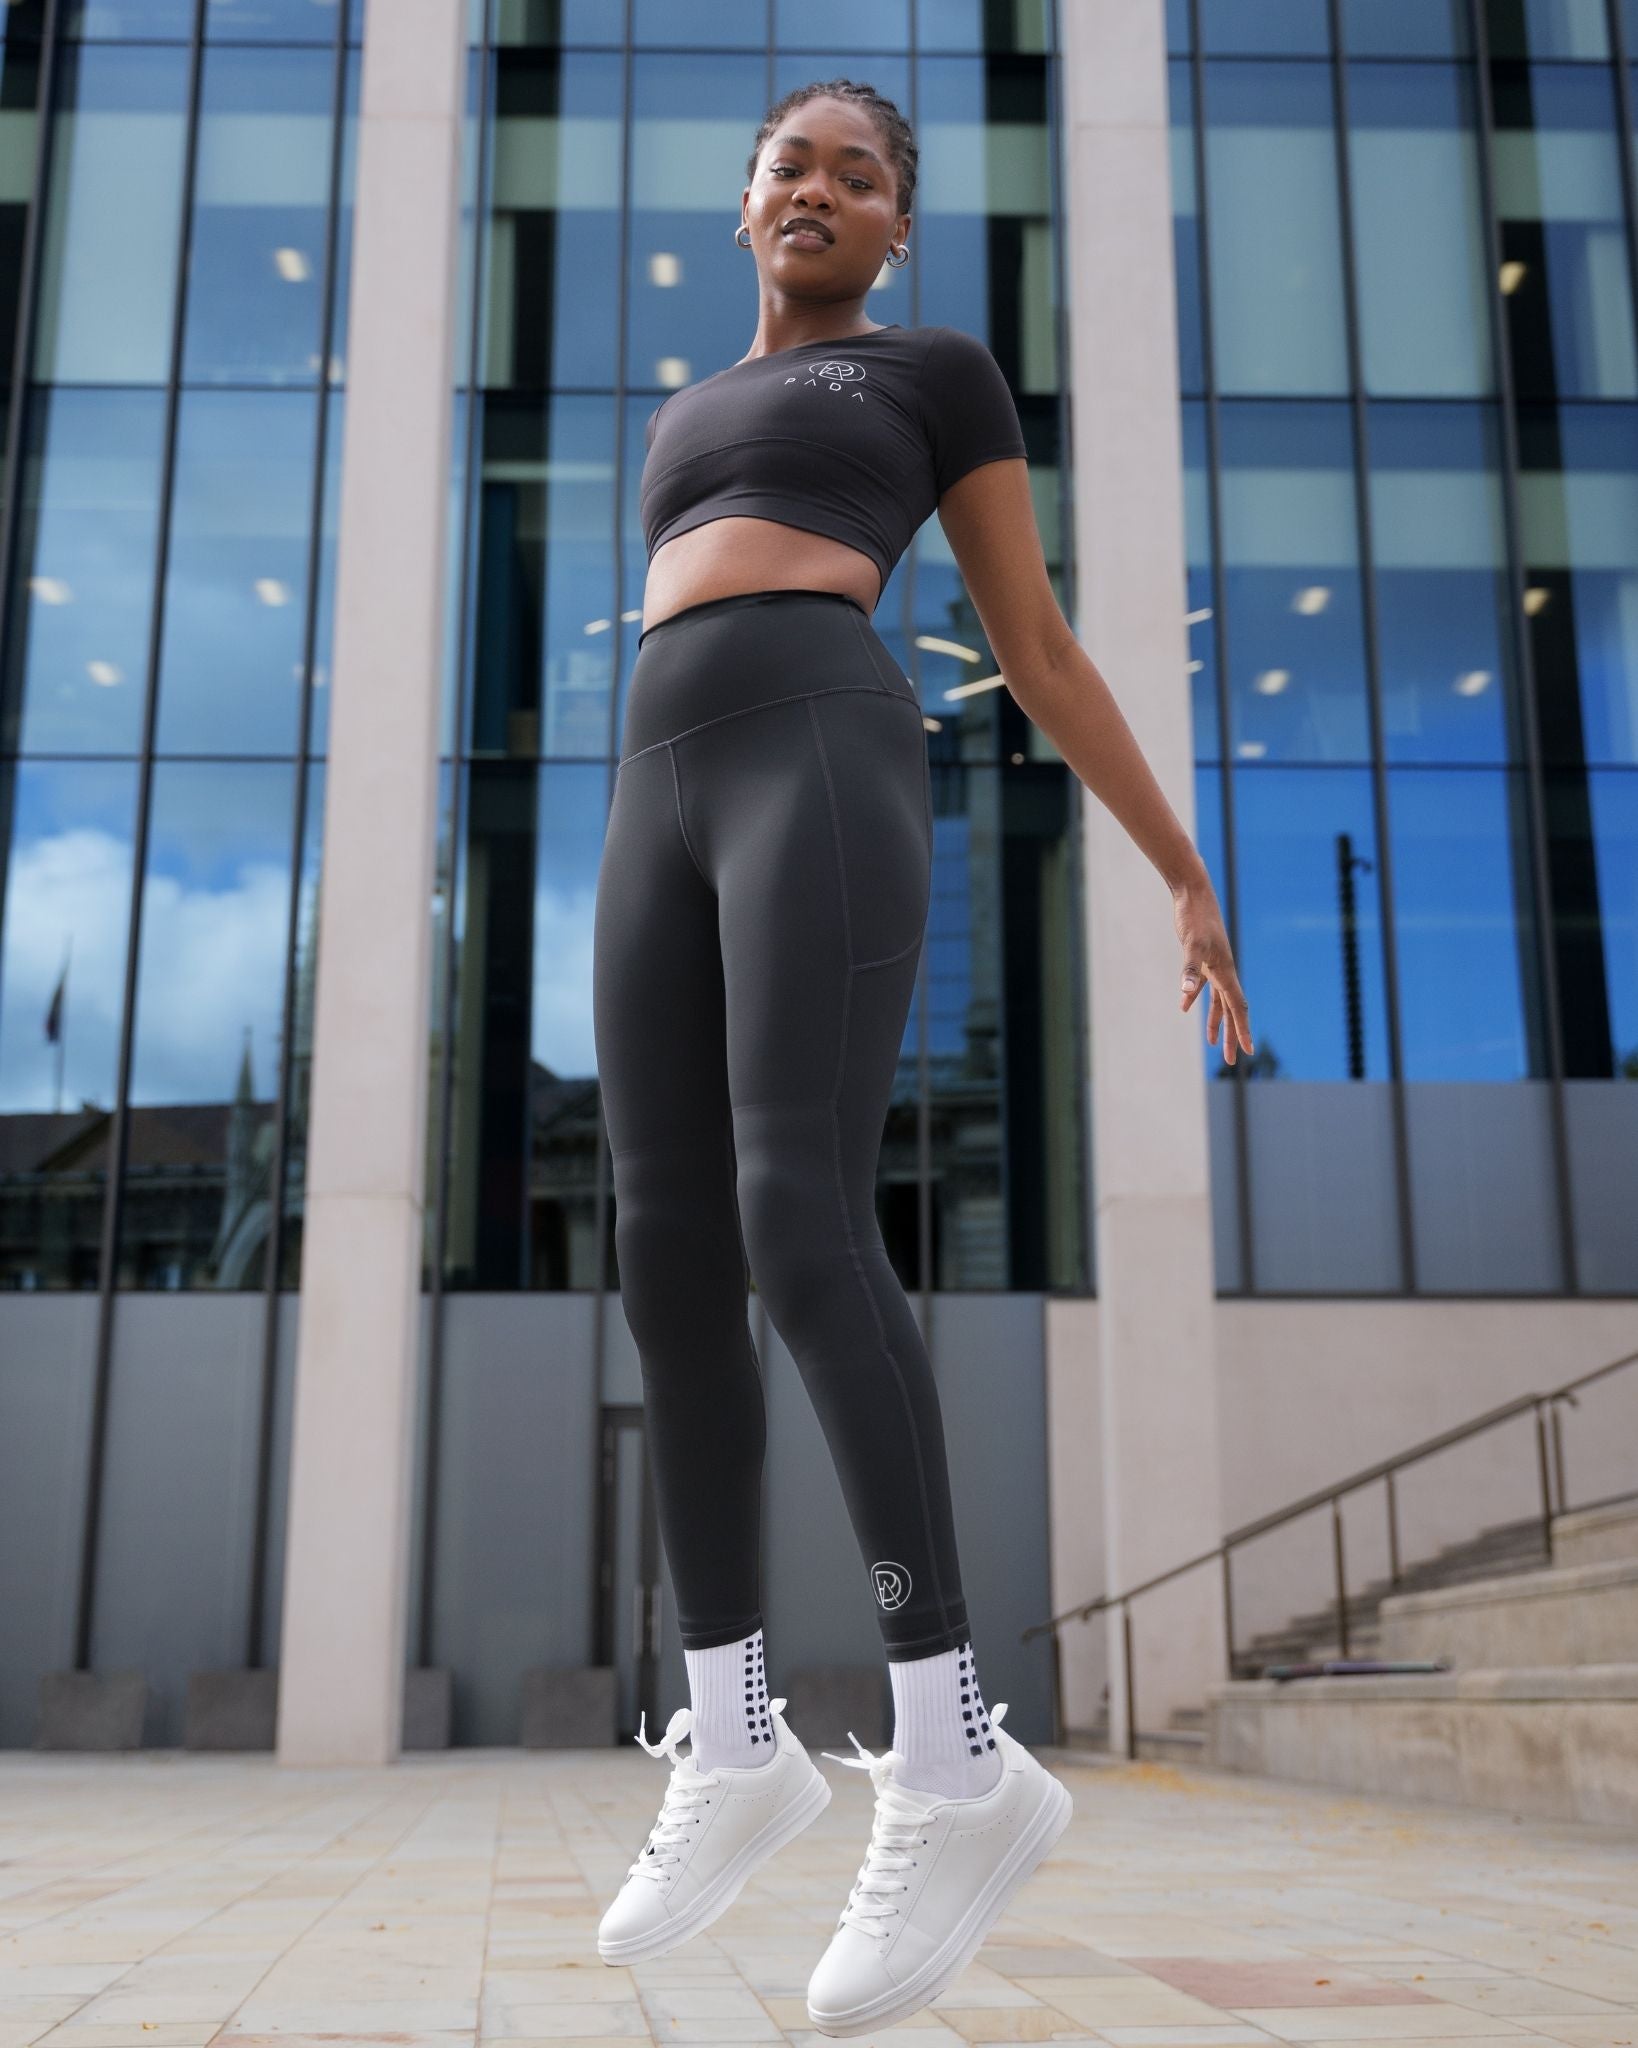 XS - L Fitness Clothing Women Sportswear High Waist Seamless Legging  Workout Short Yoga Suit Bra Top Sportswear Active Wear A054